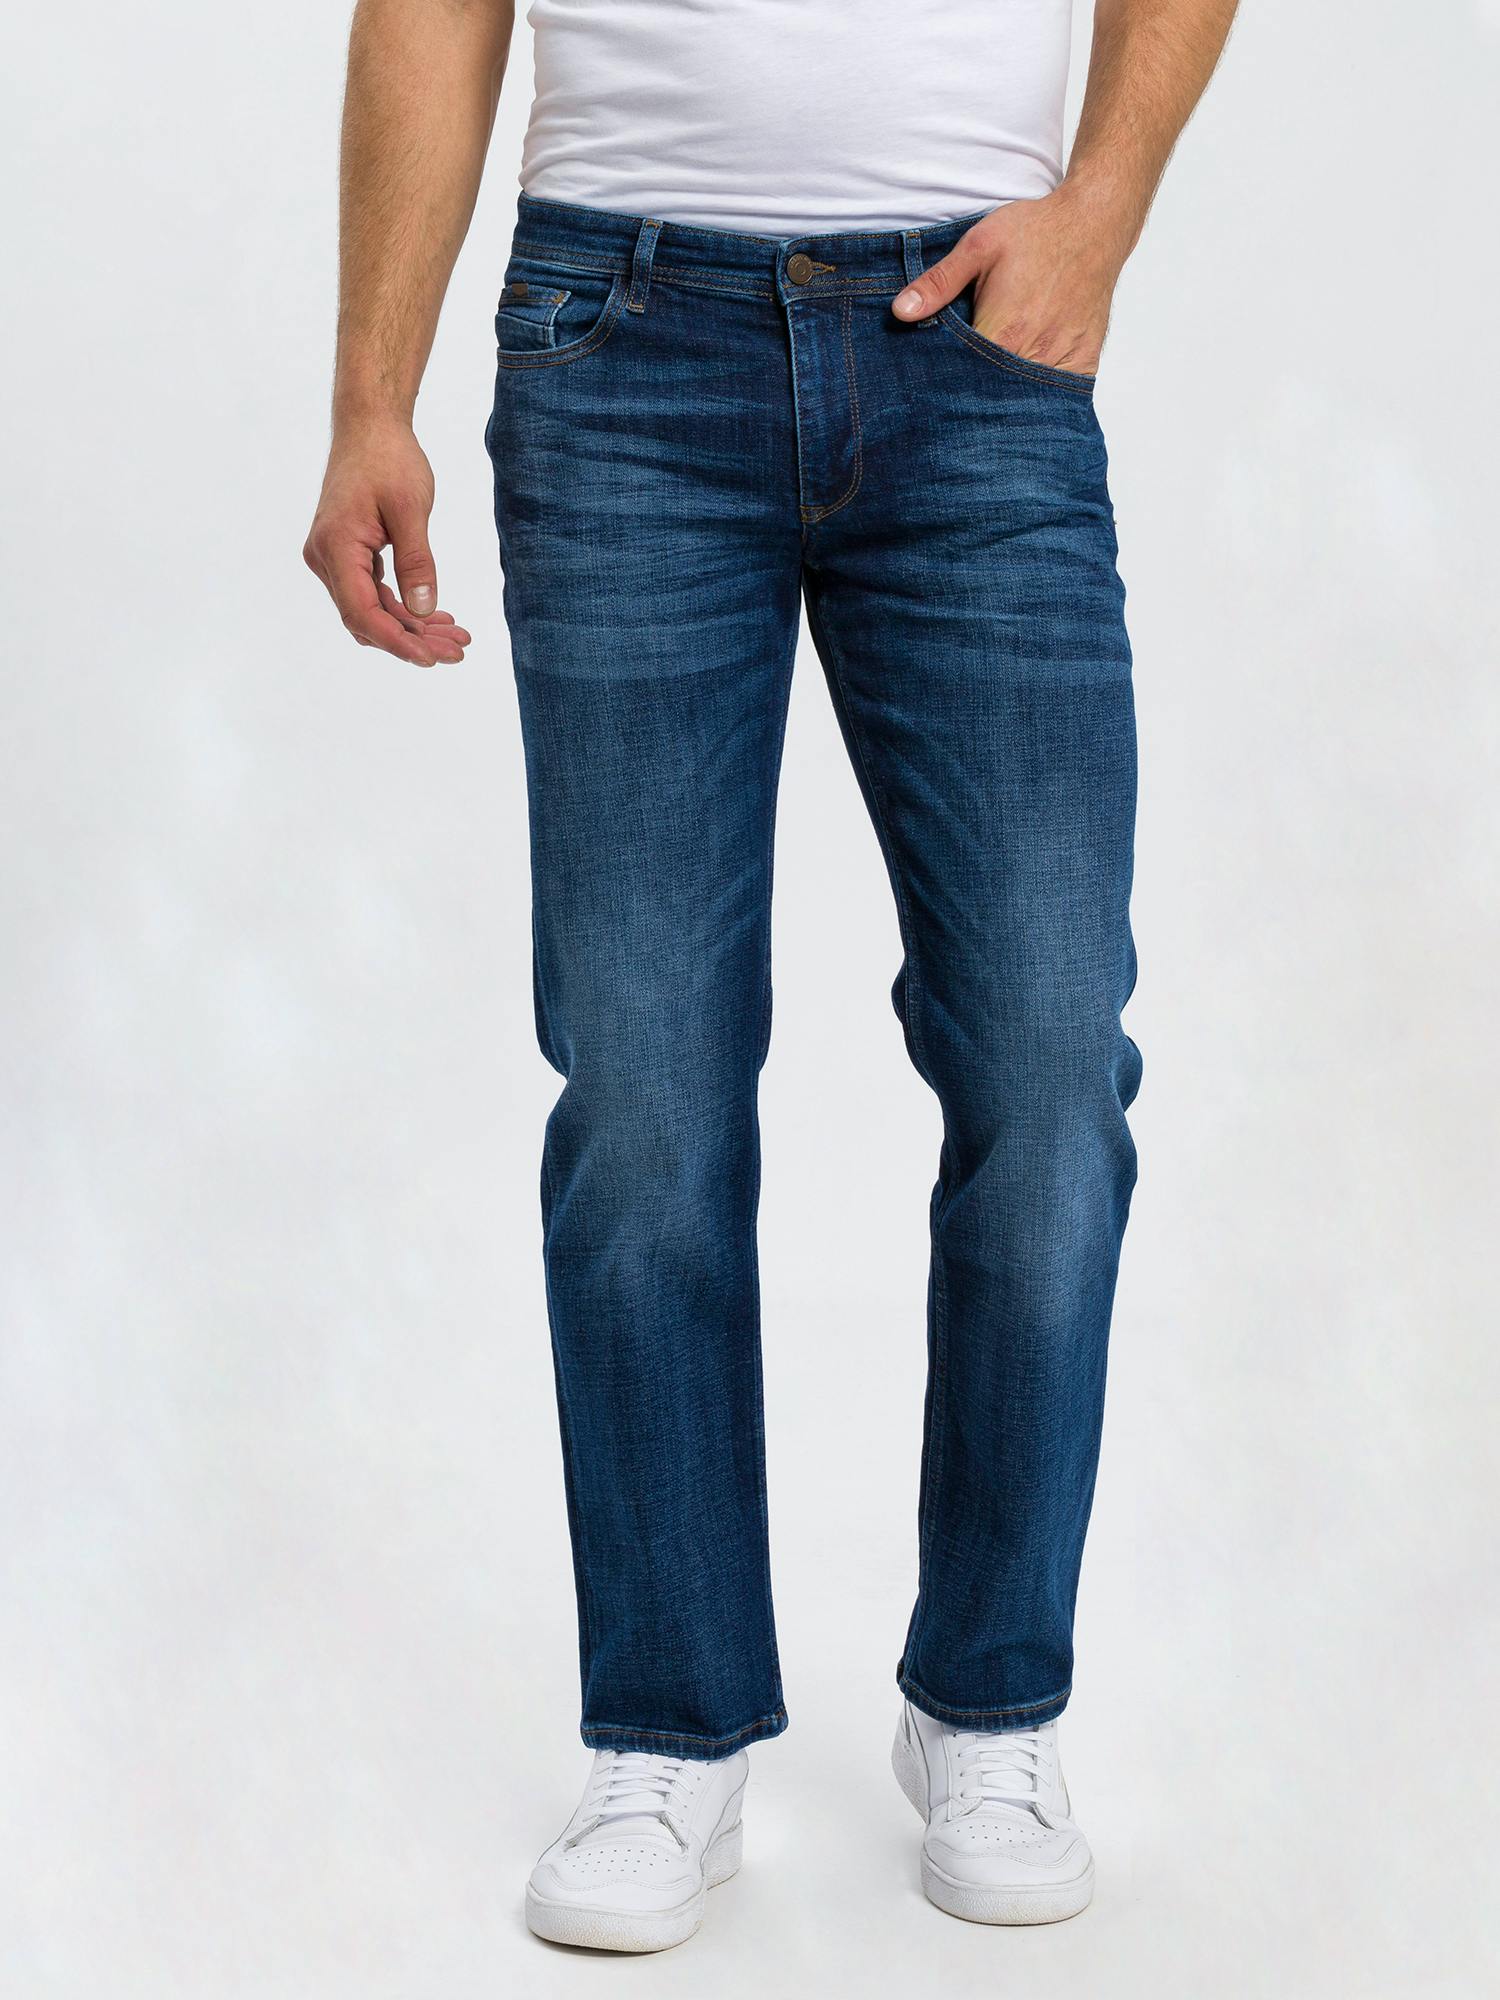 Cross Jeans Antonio 5 Pocket Pants dark mid blue